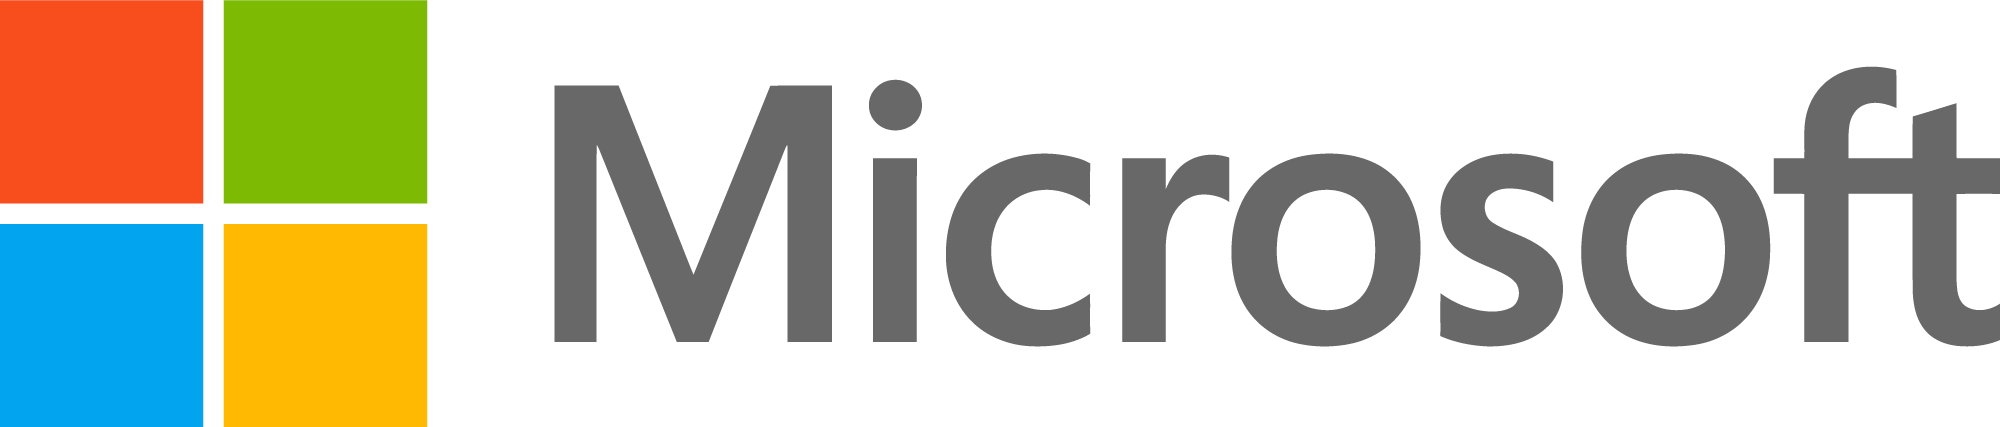 لوگوی سایت microsoft (مایکروسافت)